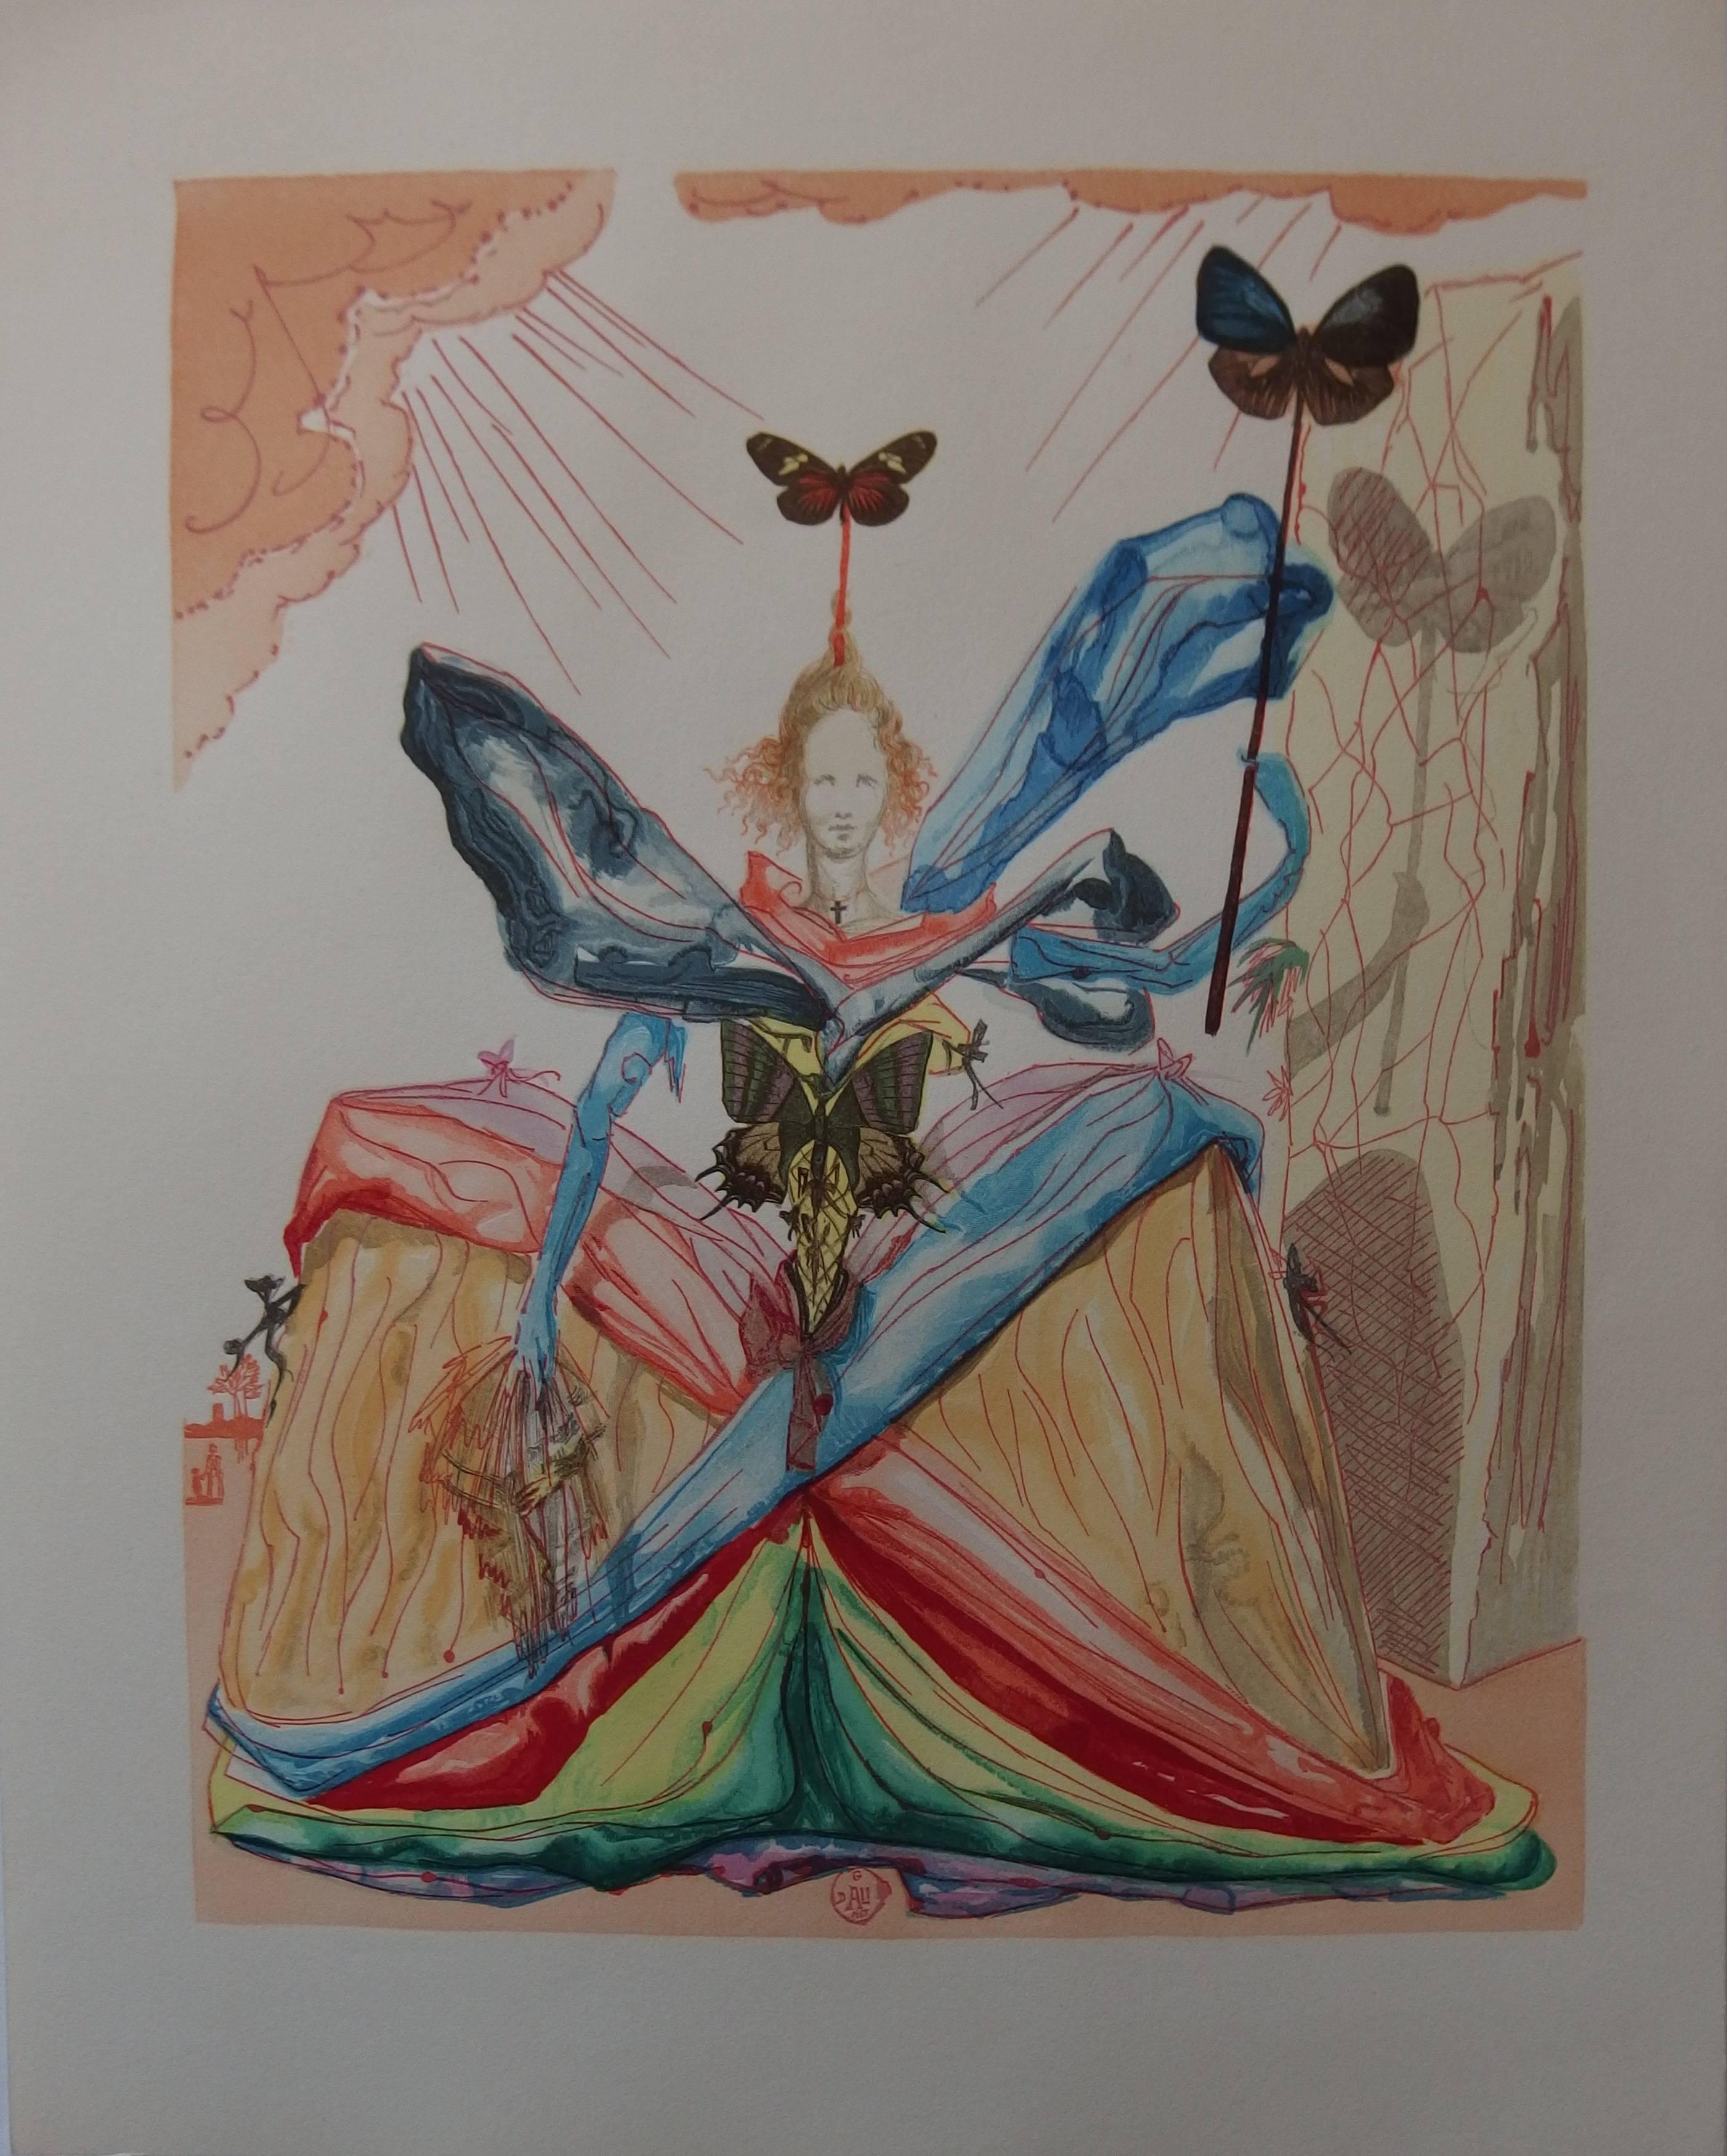 Salvador Dalí Figurative Print - Tricorne : Woman with Butterflies - Original signed woodcut - 1959